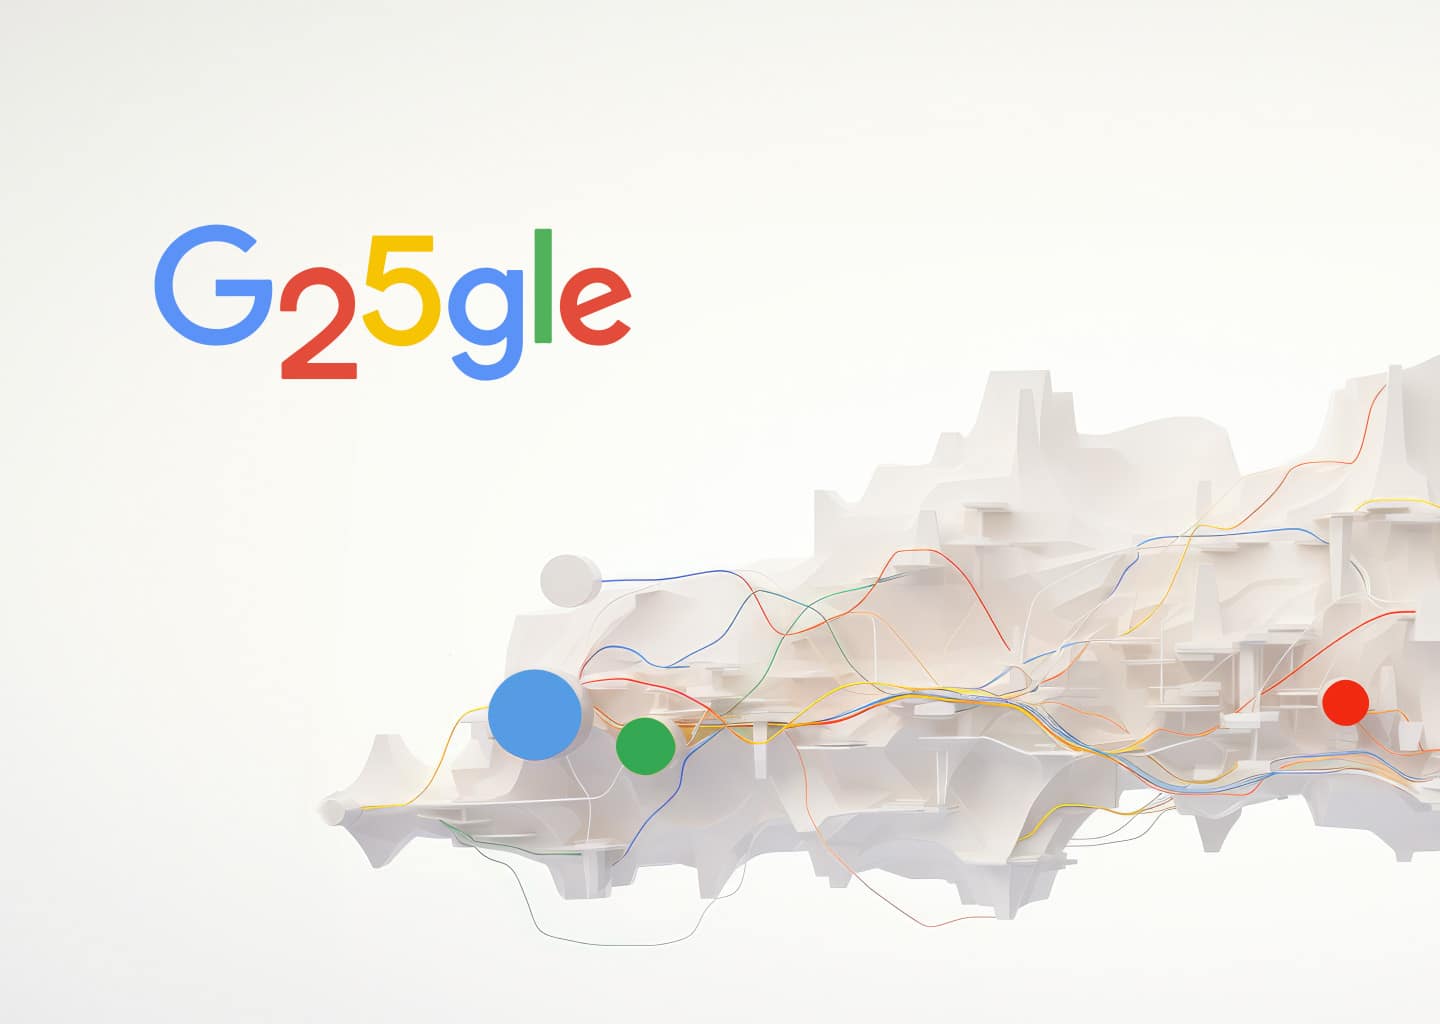 Google 25th Anniversary